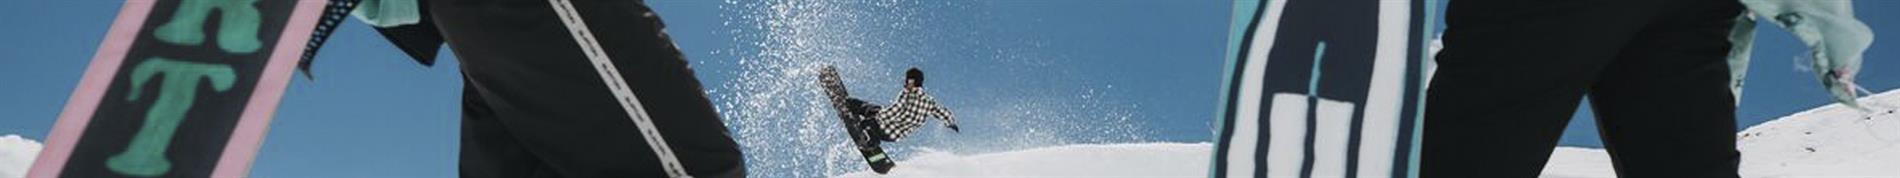 Burton High-Performance Snowboards for Kids 